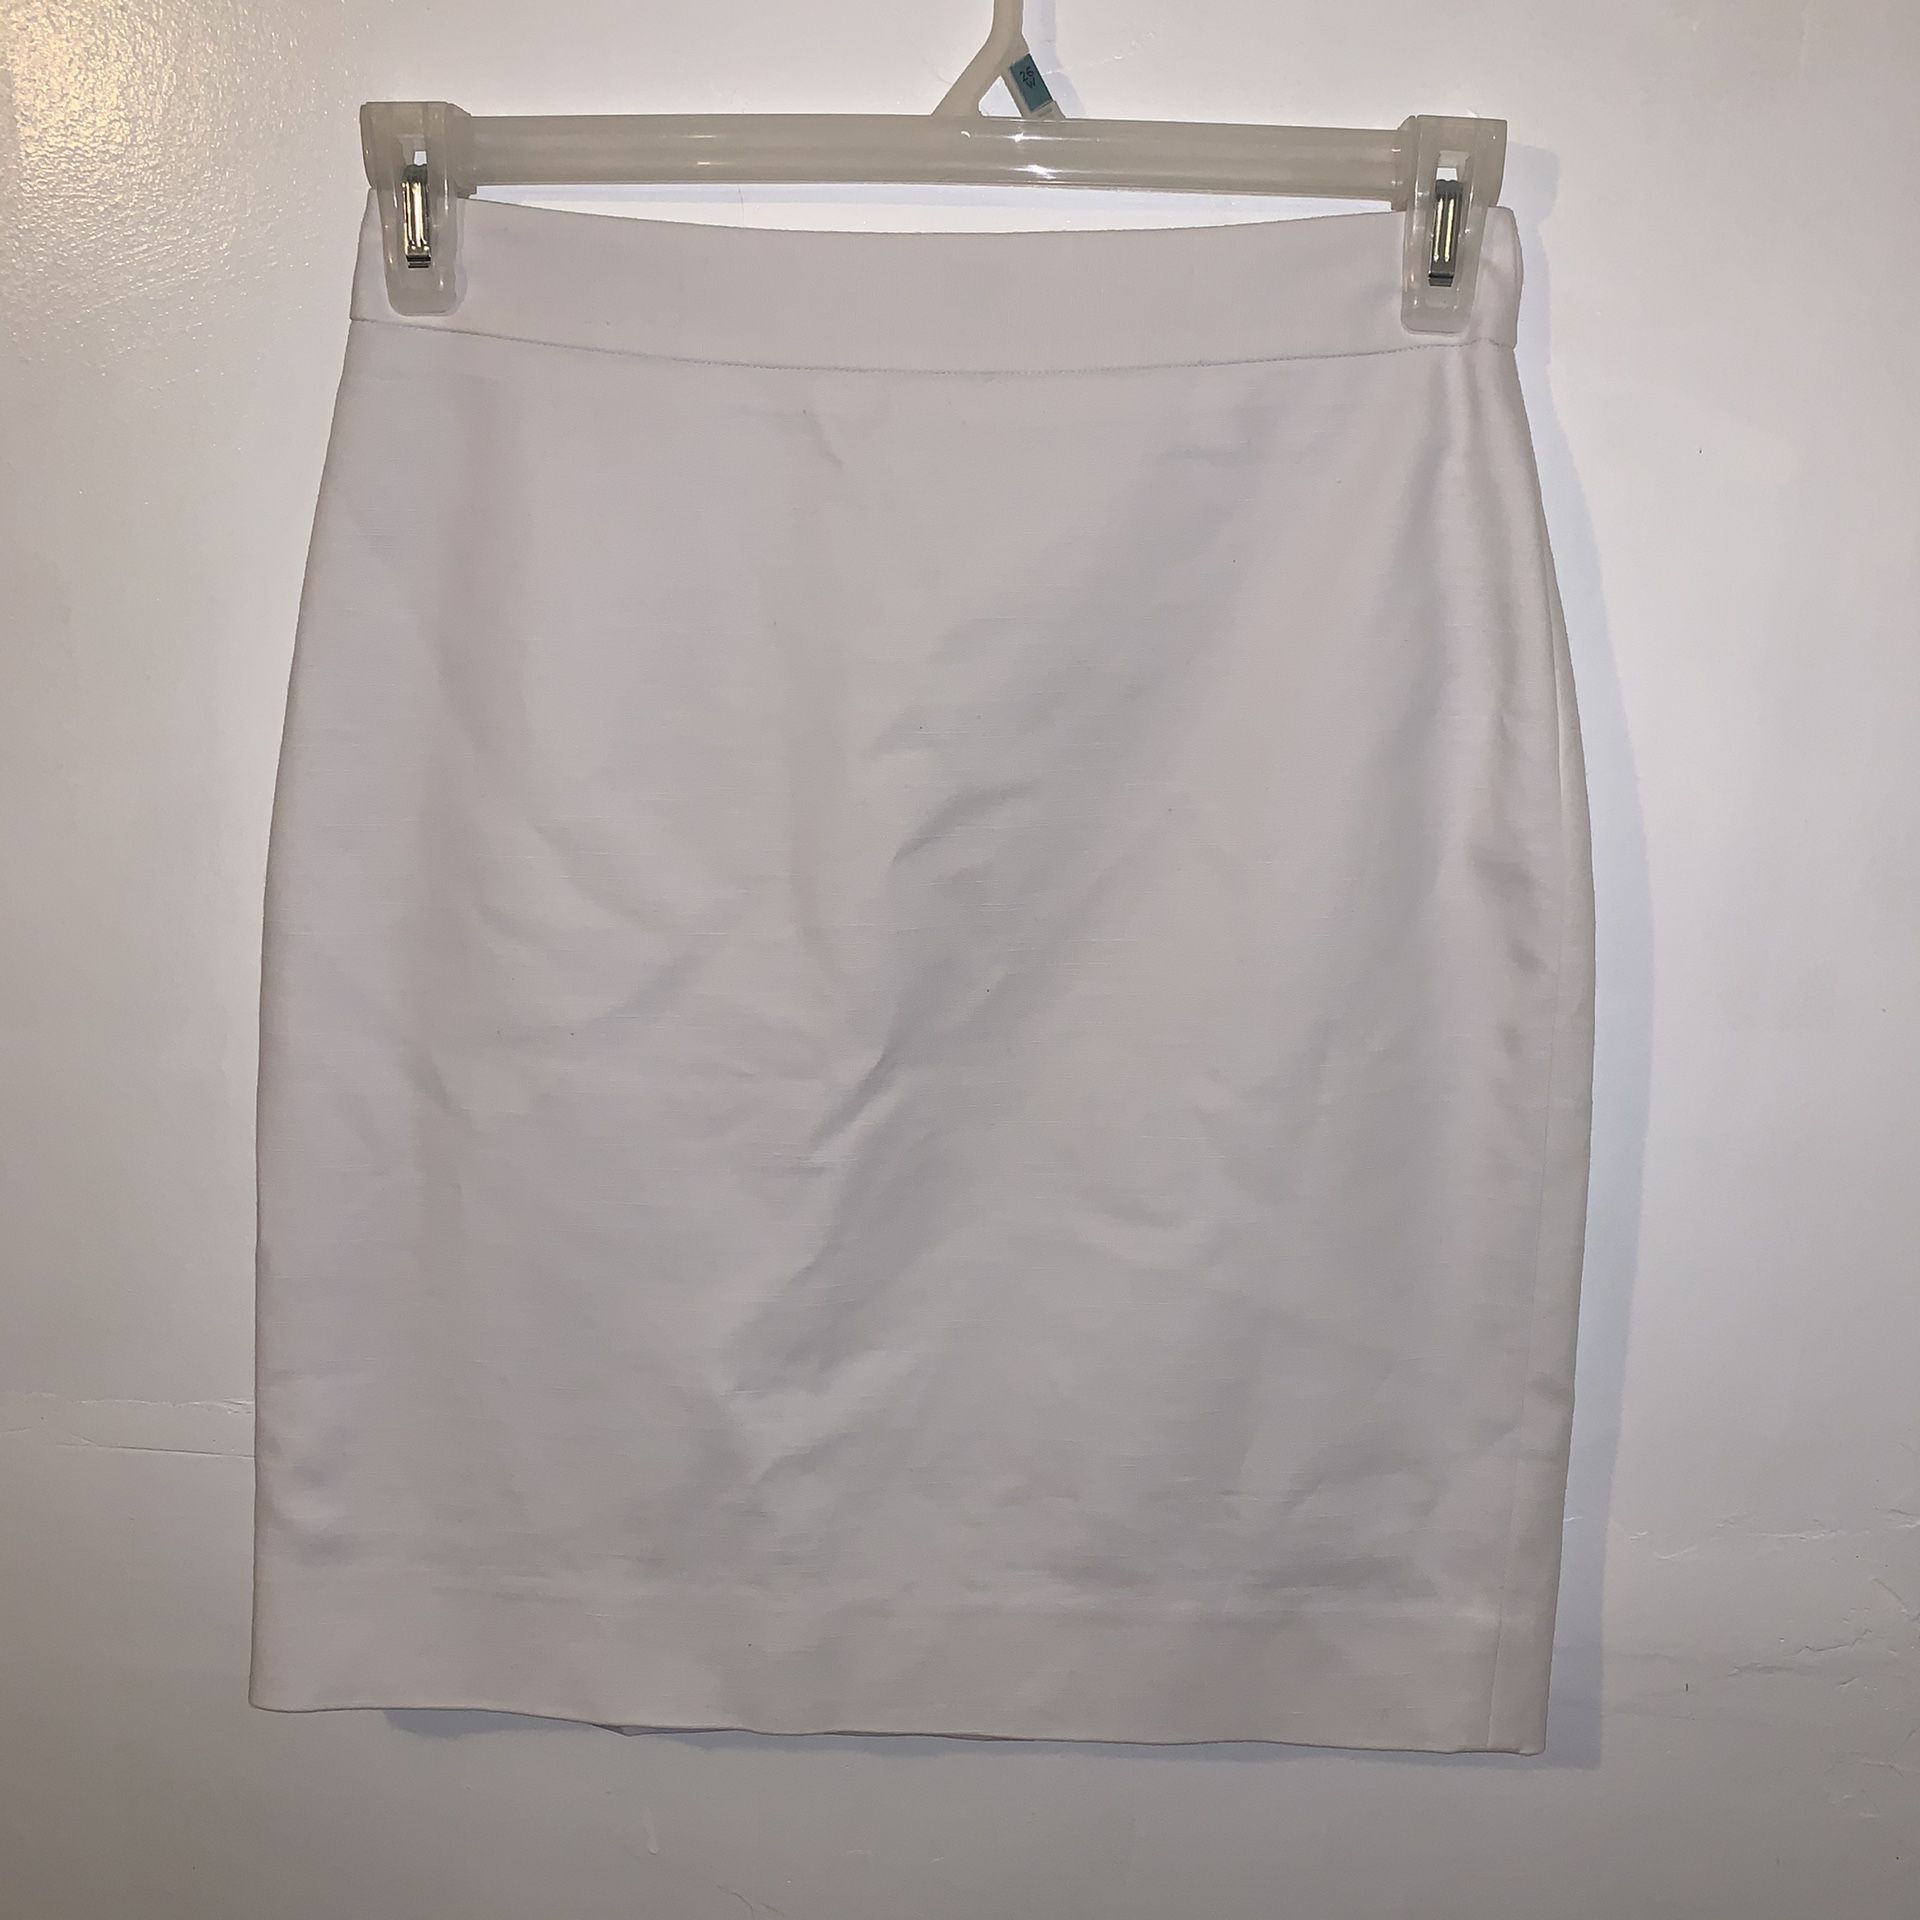 Kate Spade Women's White Pencil Skirt Size 4 Small